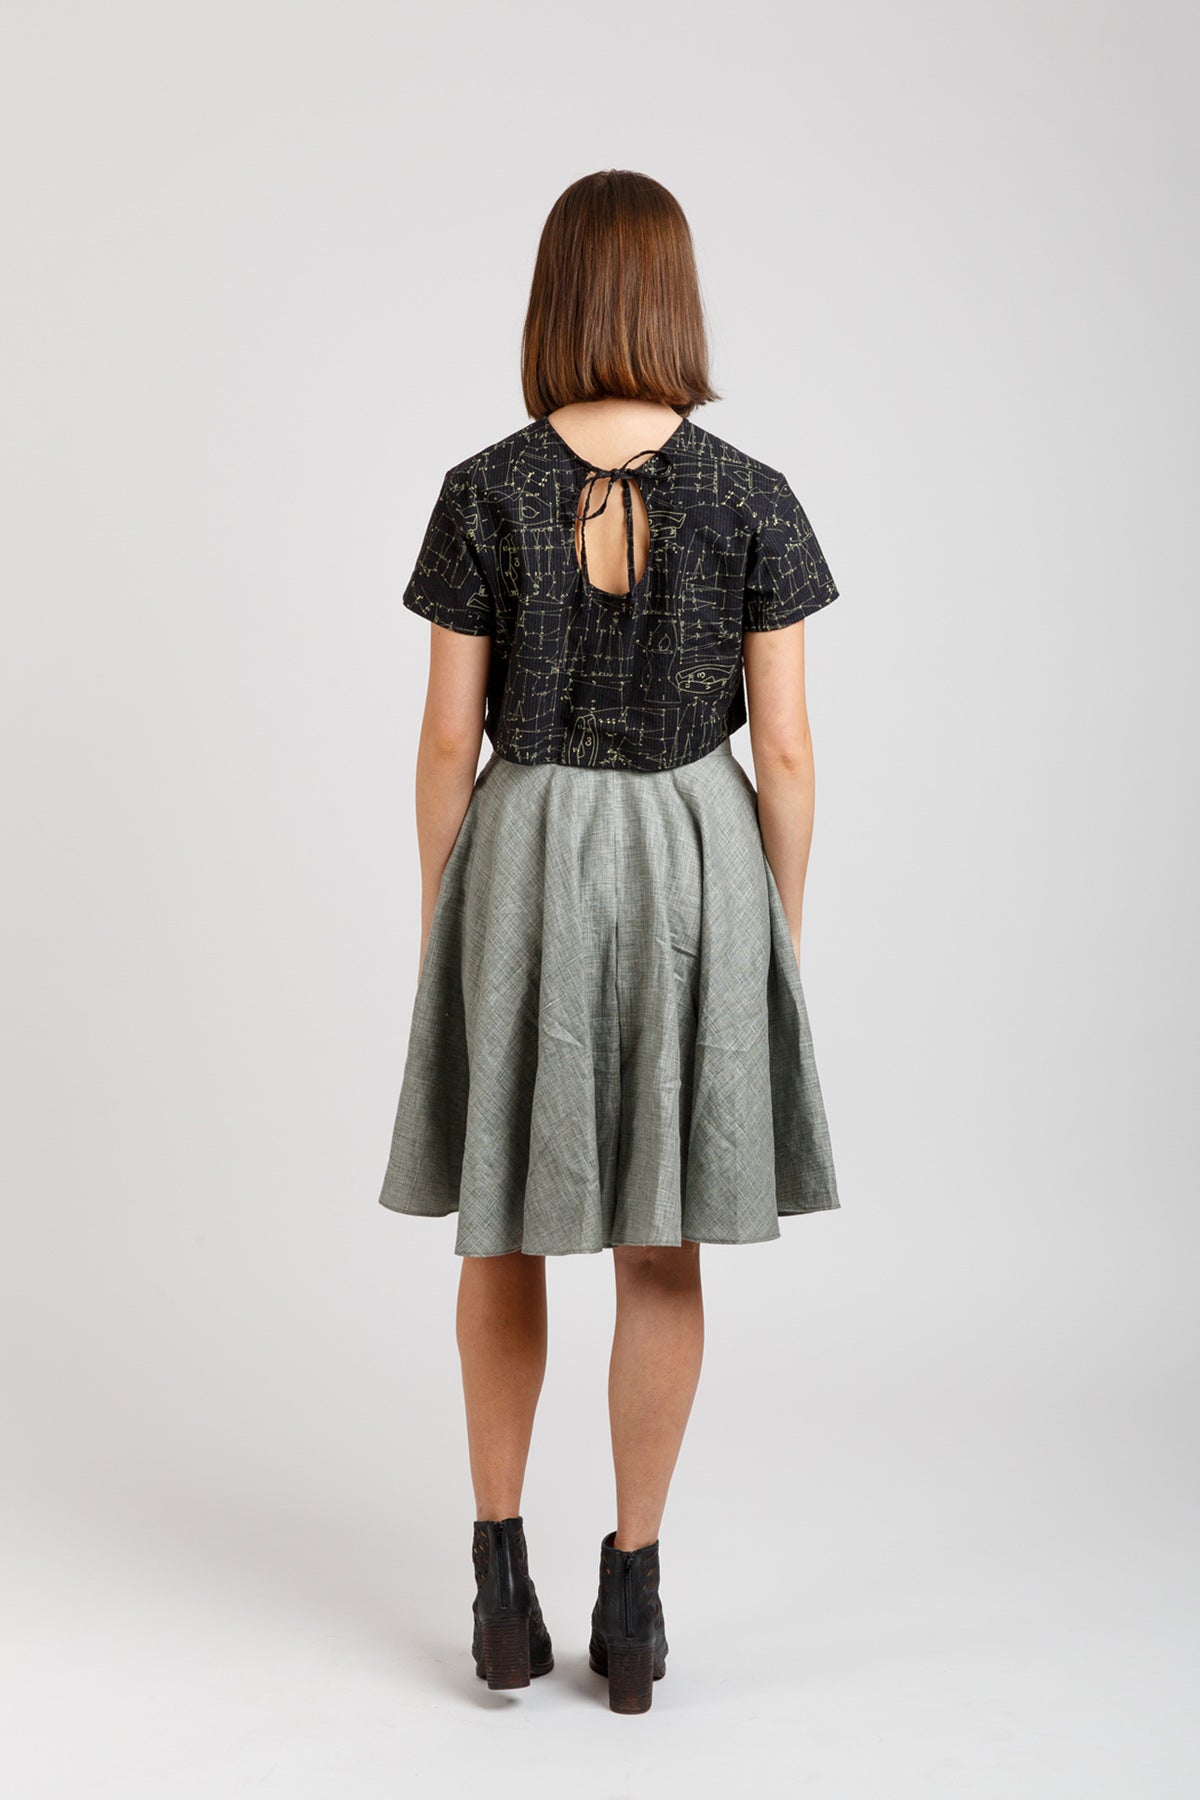 Sudley Blouse & Dress by Megan Nielsen